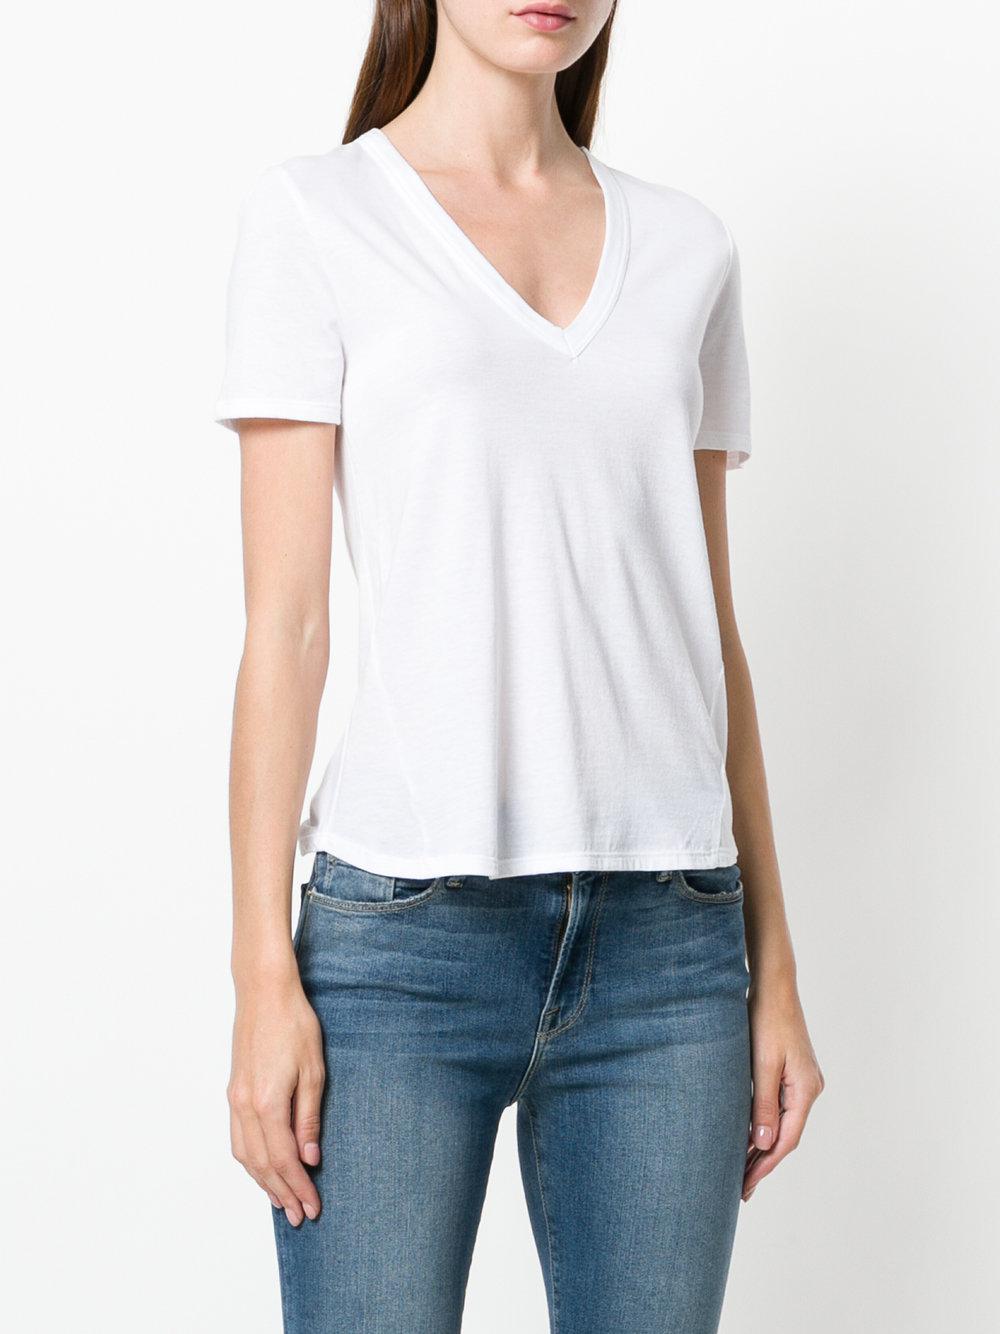 Veronica Beard Cotton V-neck T-shirt in White - Lyst